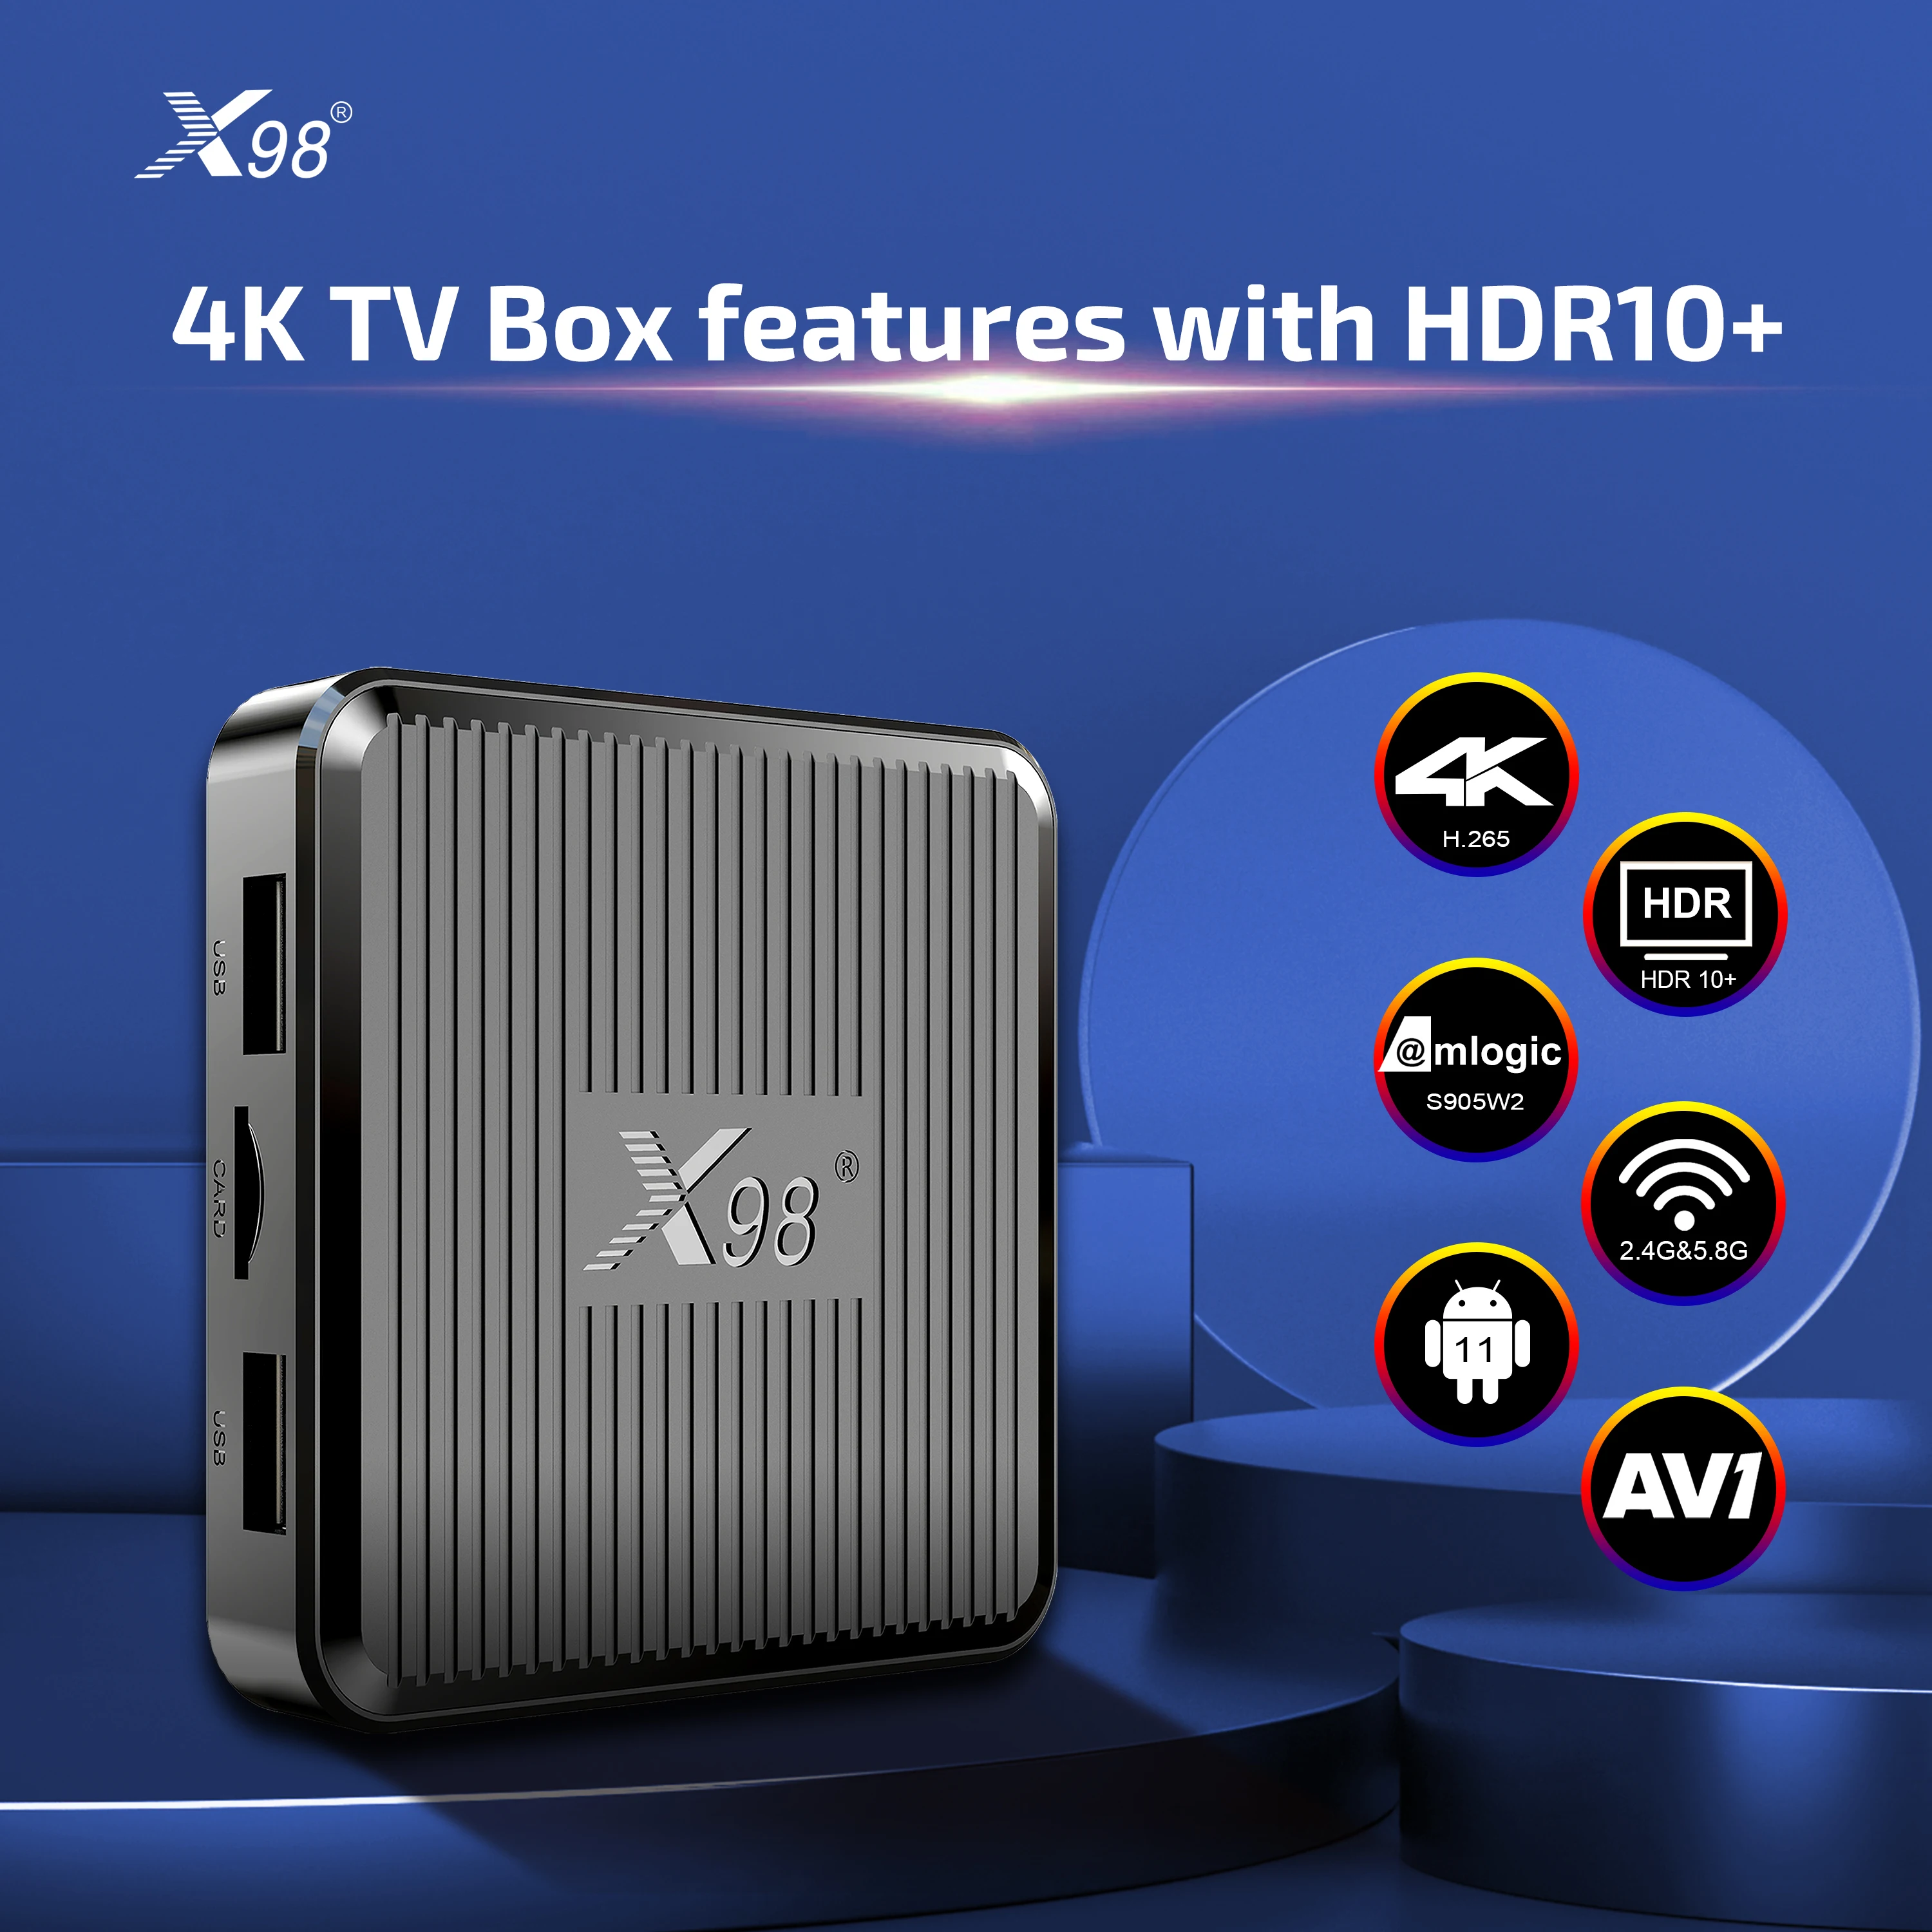 WOOPKER H96 Max X4 Smart TV Box Android 11 Amlogic S905X4 8K AV1 Media  Player 4GB 64GB BT4.0 Dual Wifi Voice Control Set Top Box